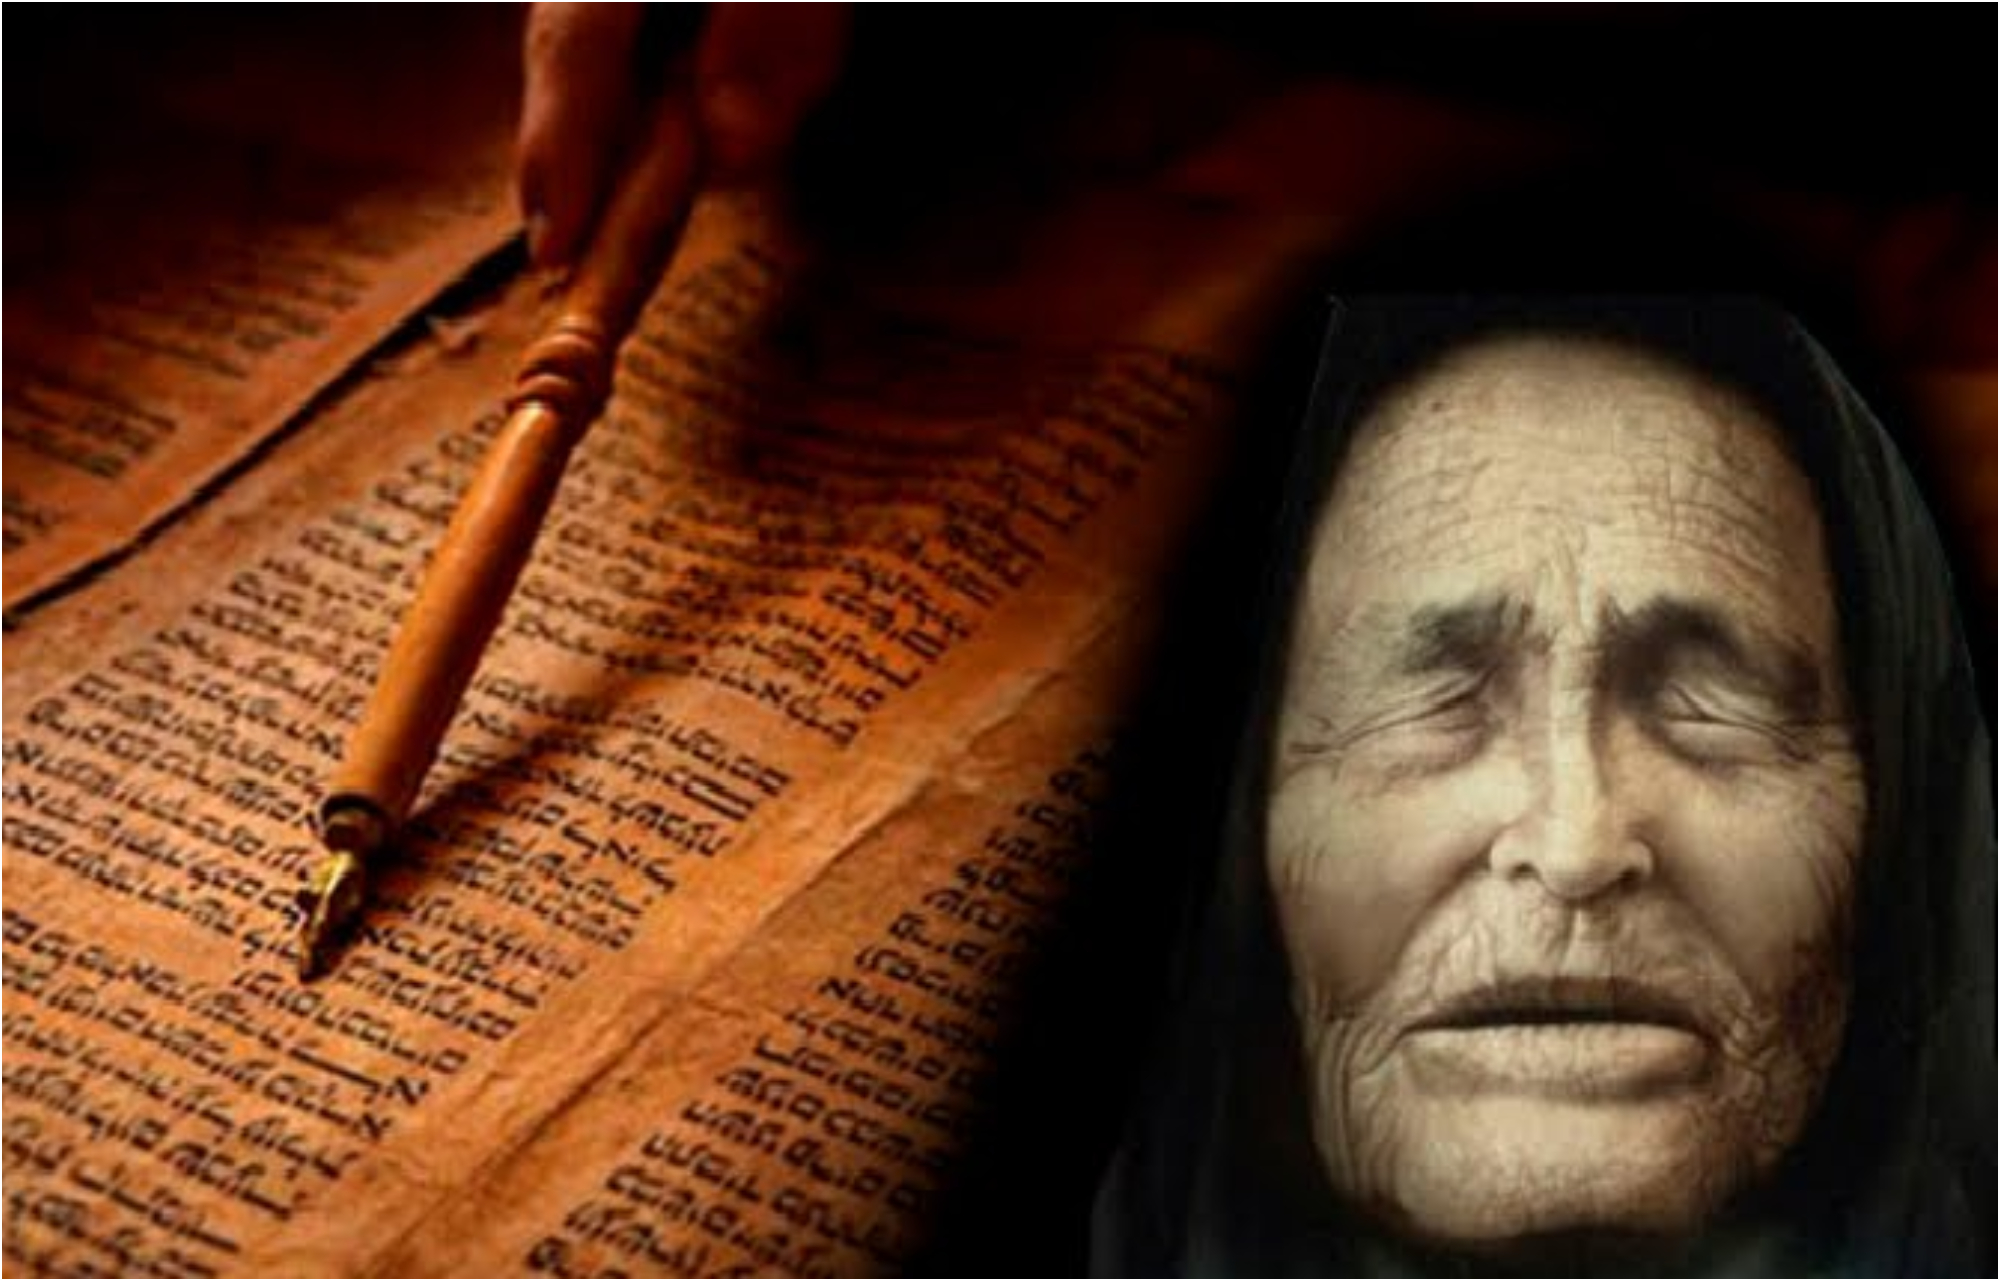 Baba Vanga η γυναίκα “Νοστράδαμος” των Βαλκανίων: Οι τρομακτικές προφητείες της τυφλής μάντισσας μέχρι το 5079